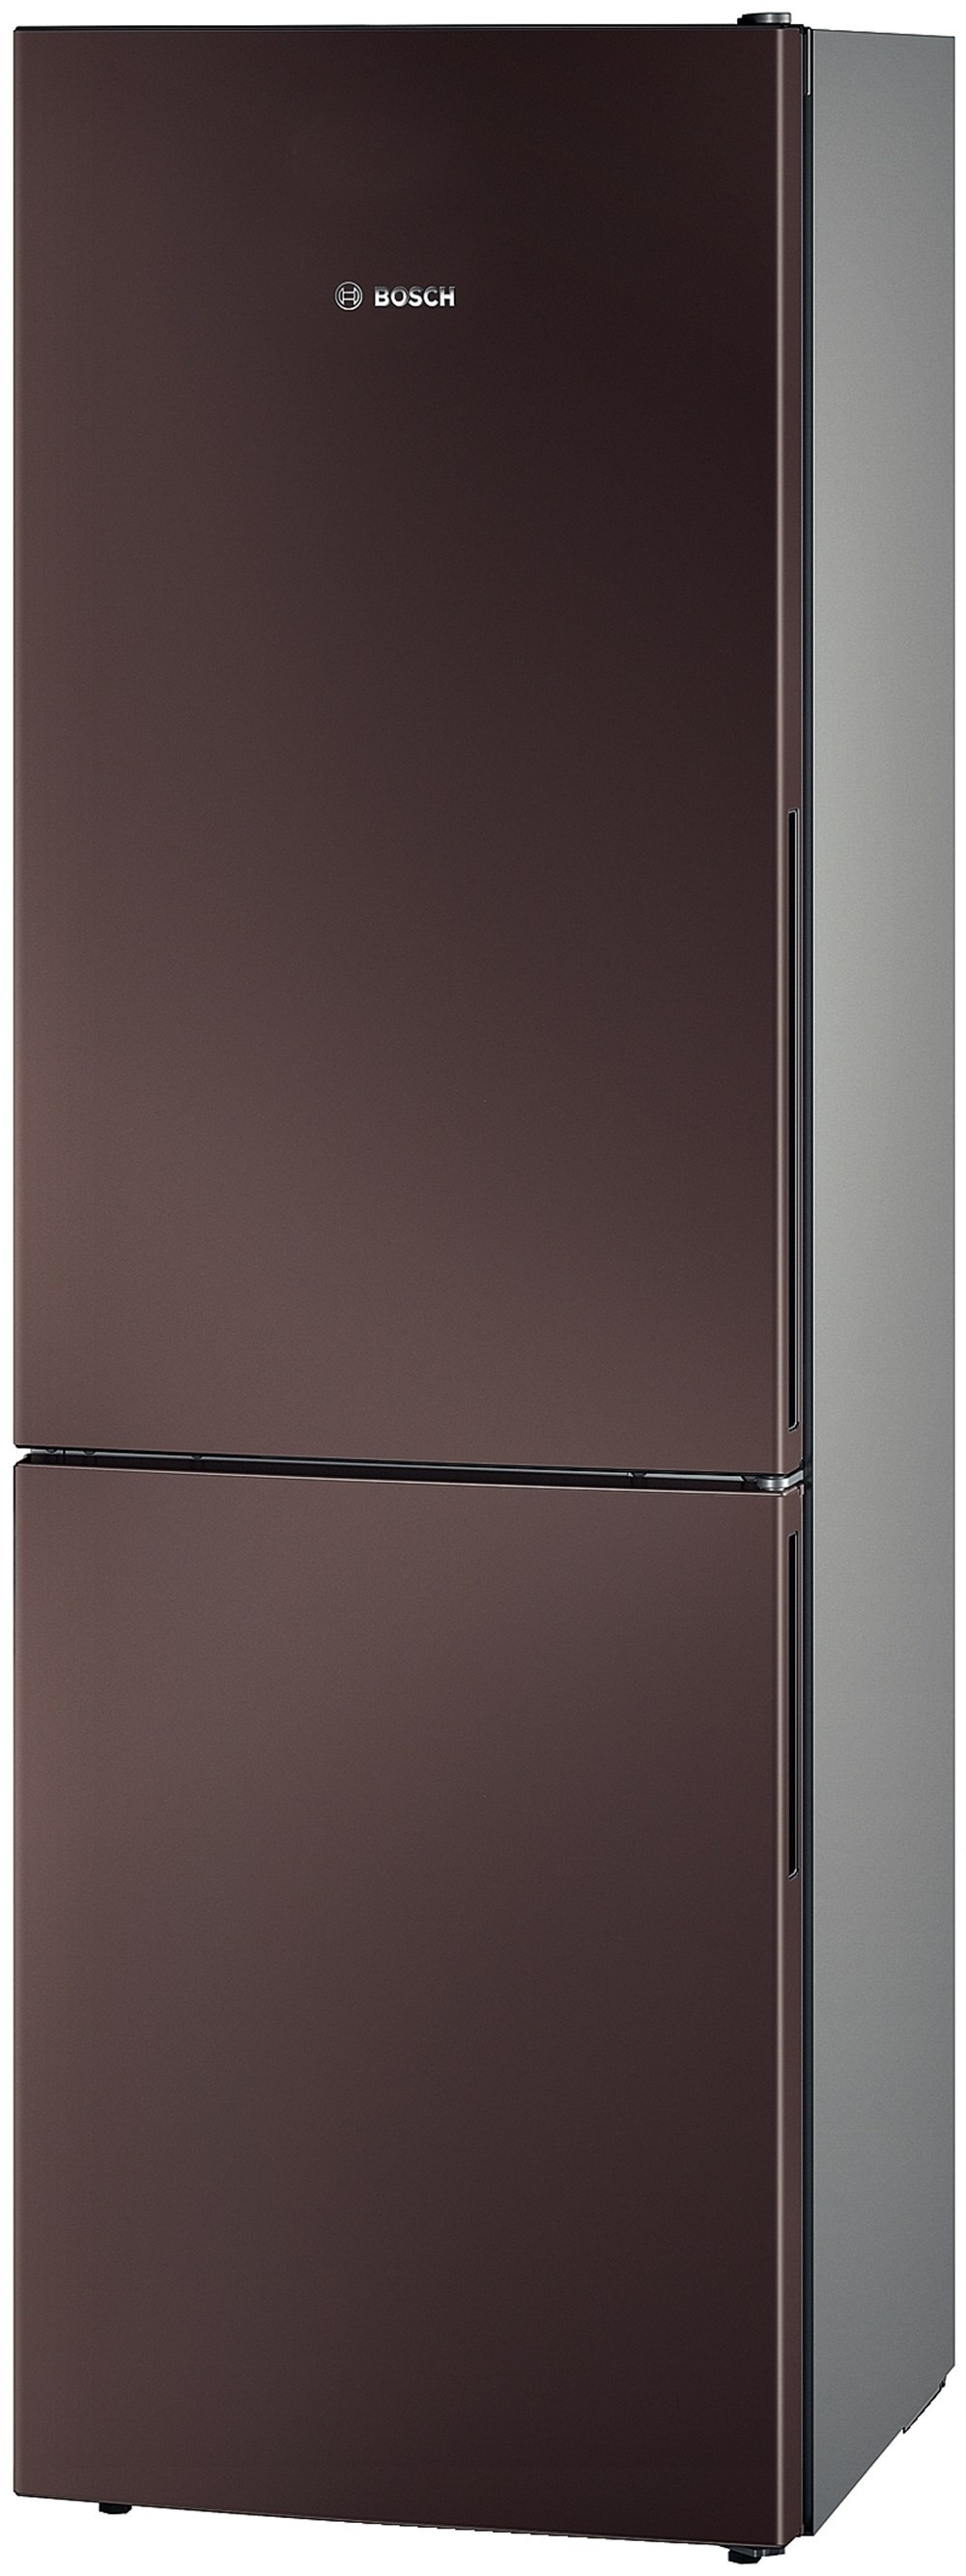 Холодильник Bosch kgv36vd32s